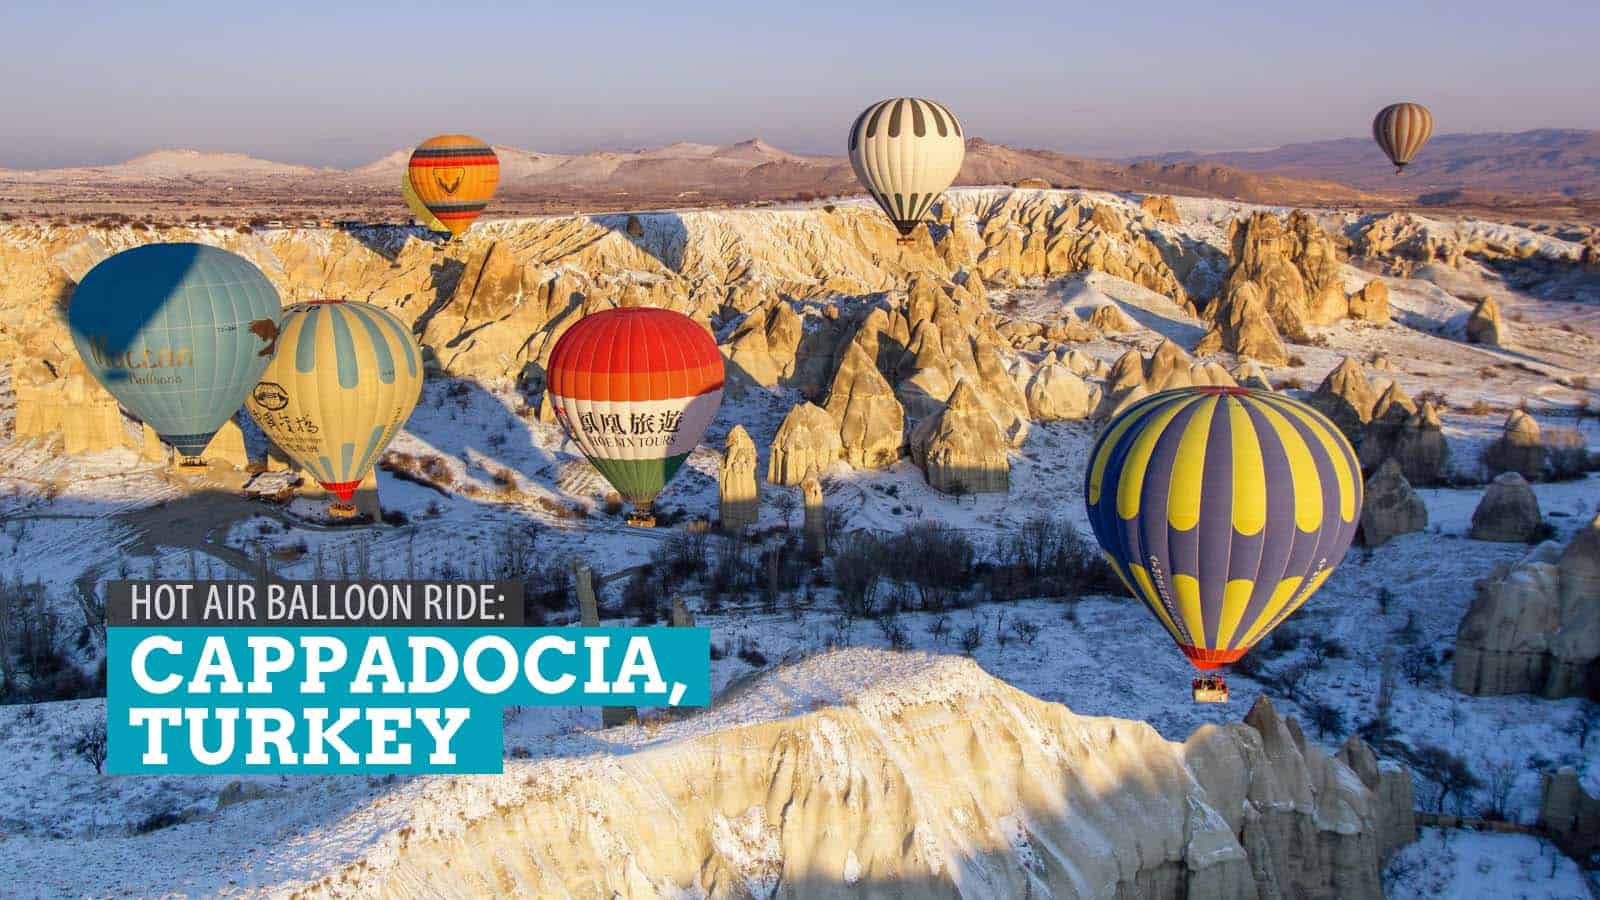 Cappadocia, Turkey: Hot Air Balloon Ride at Sunrise